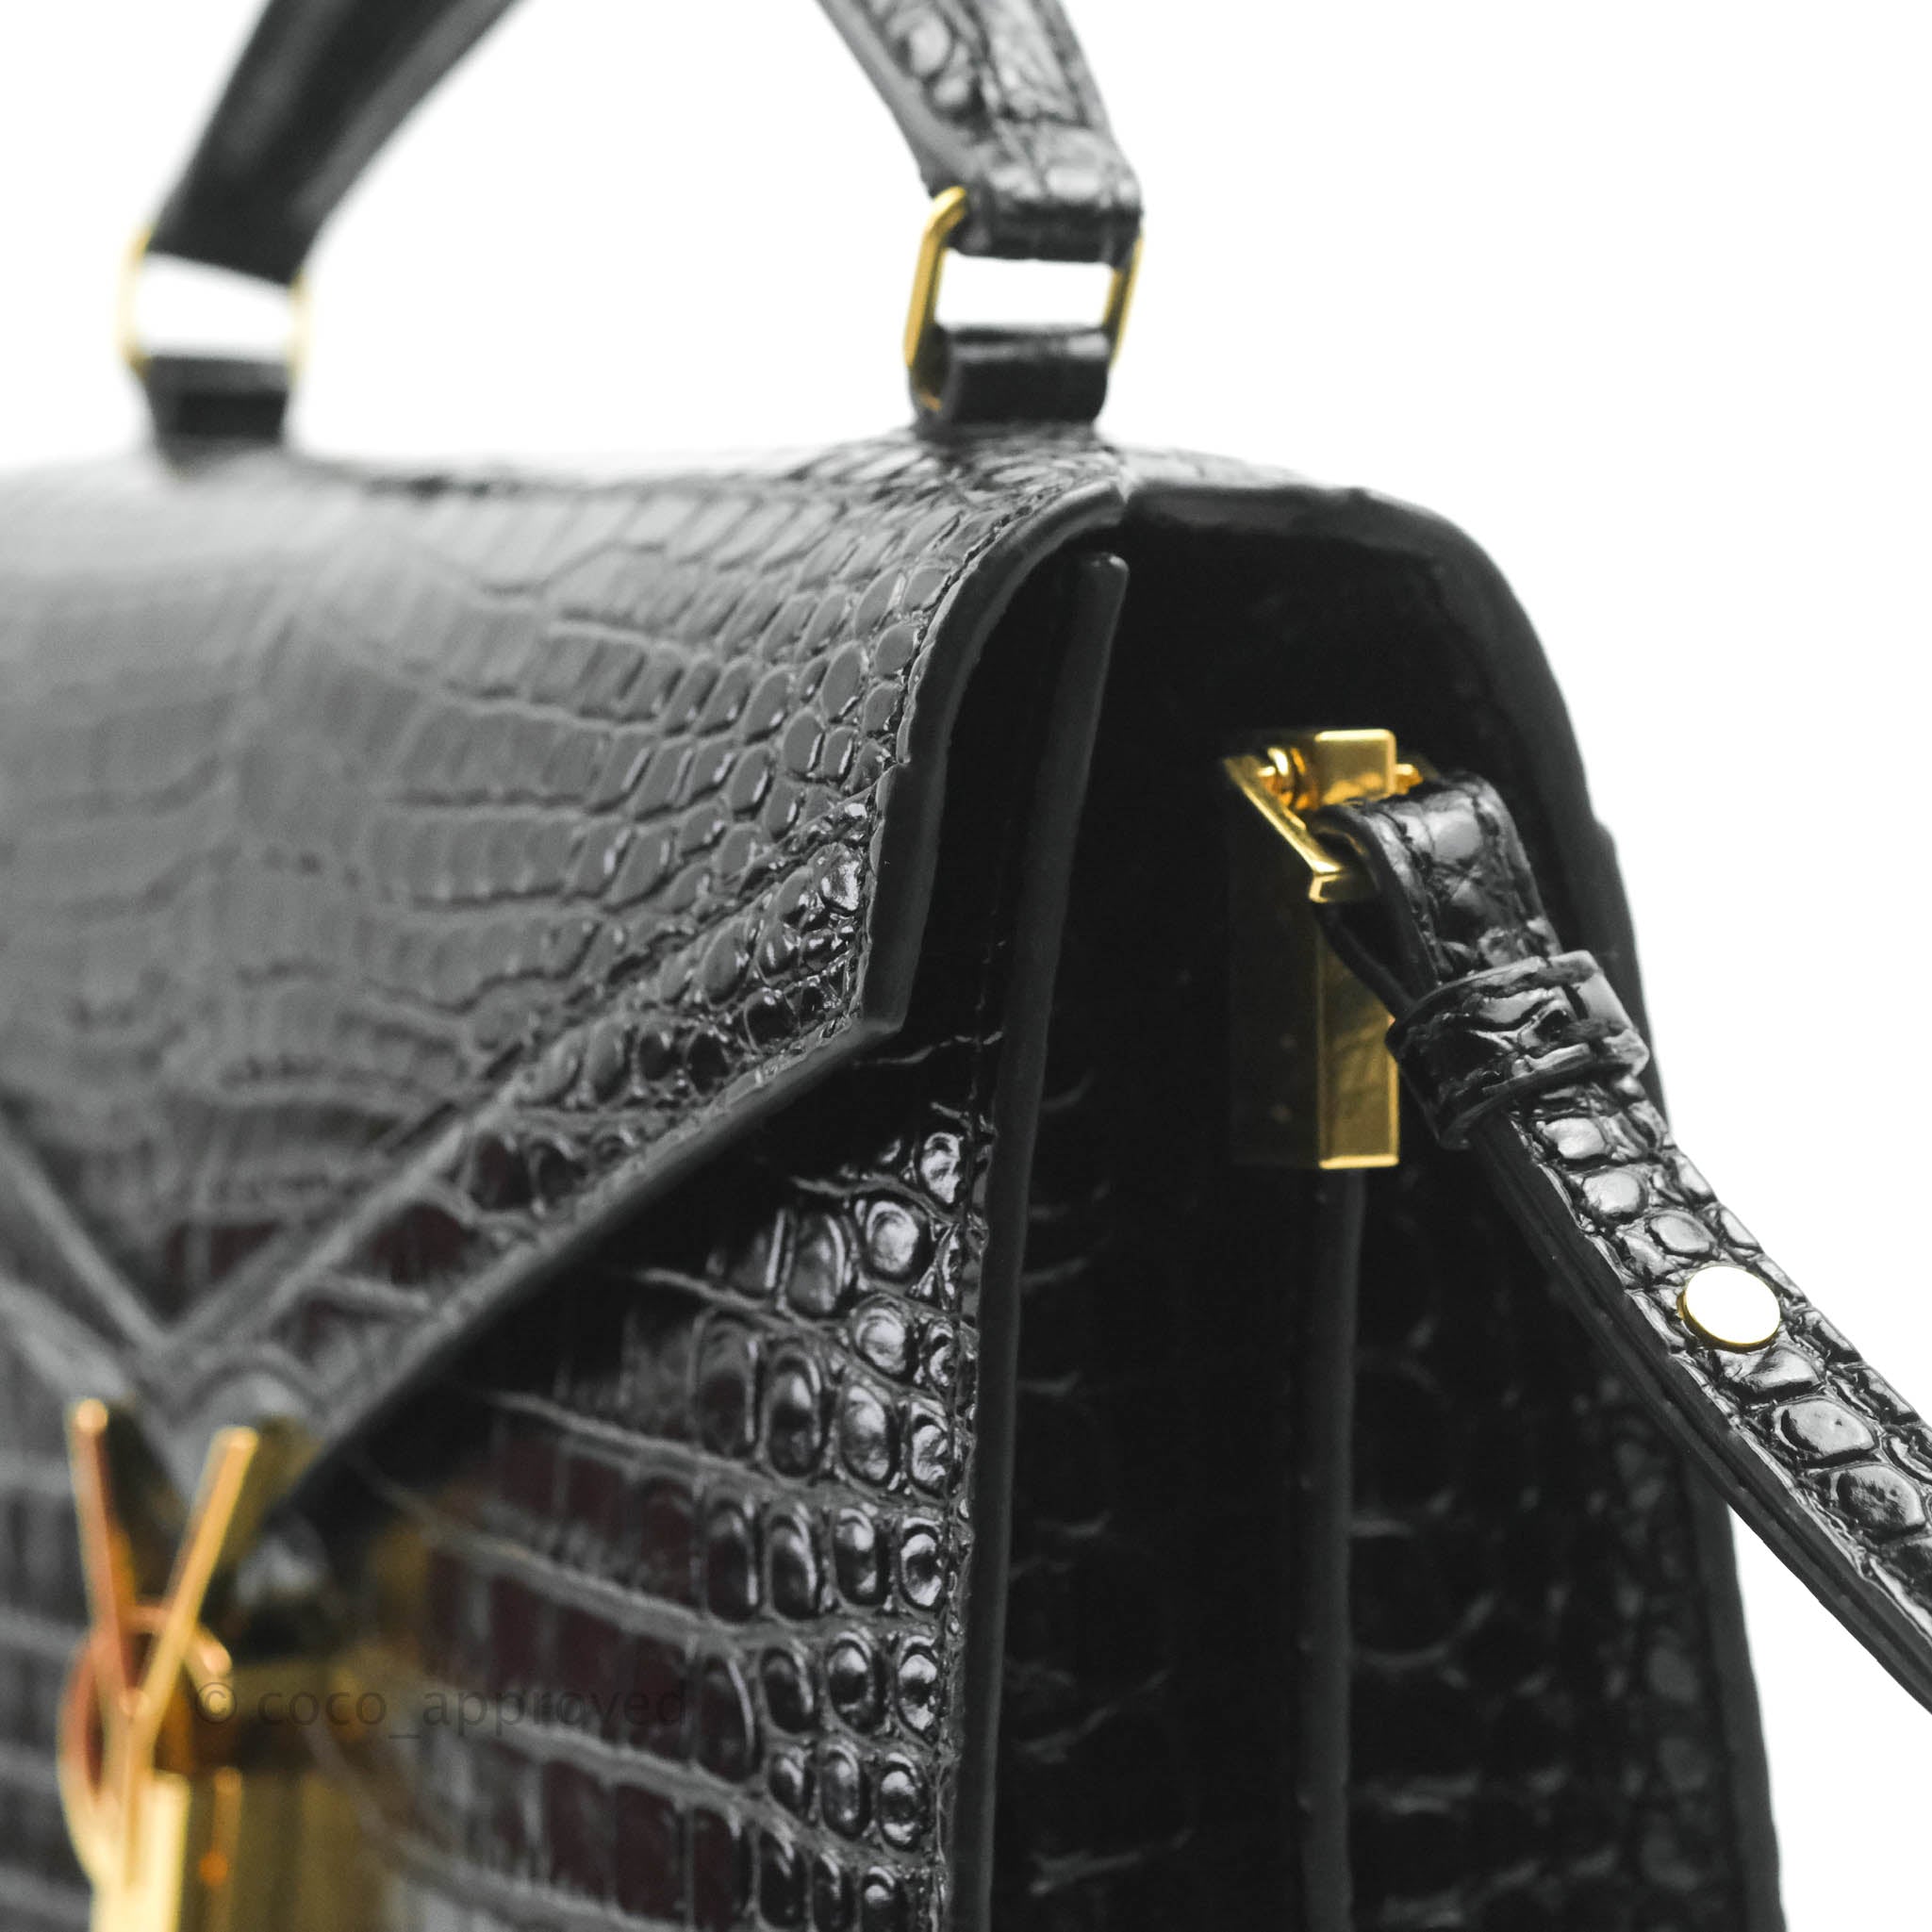 CASSANDRA Mini top handle bag in crocodile-embossed shiny leather